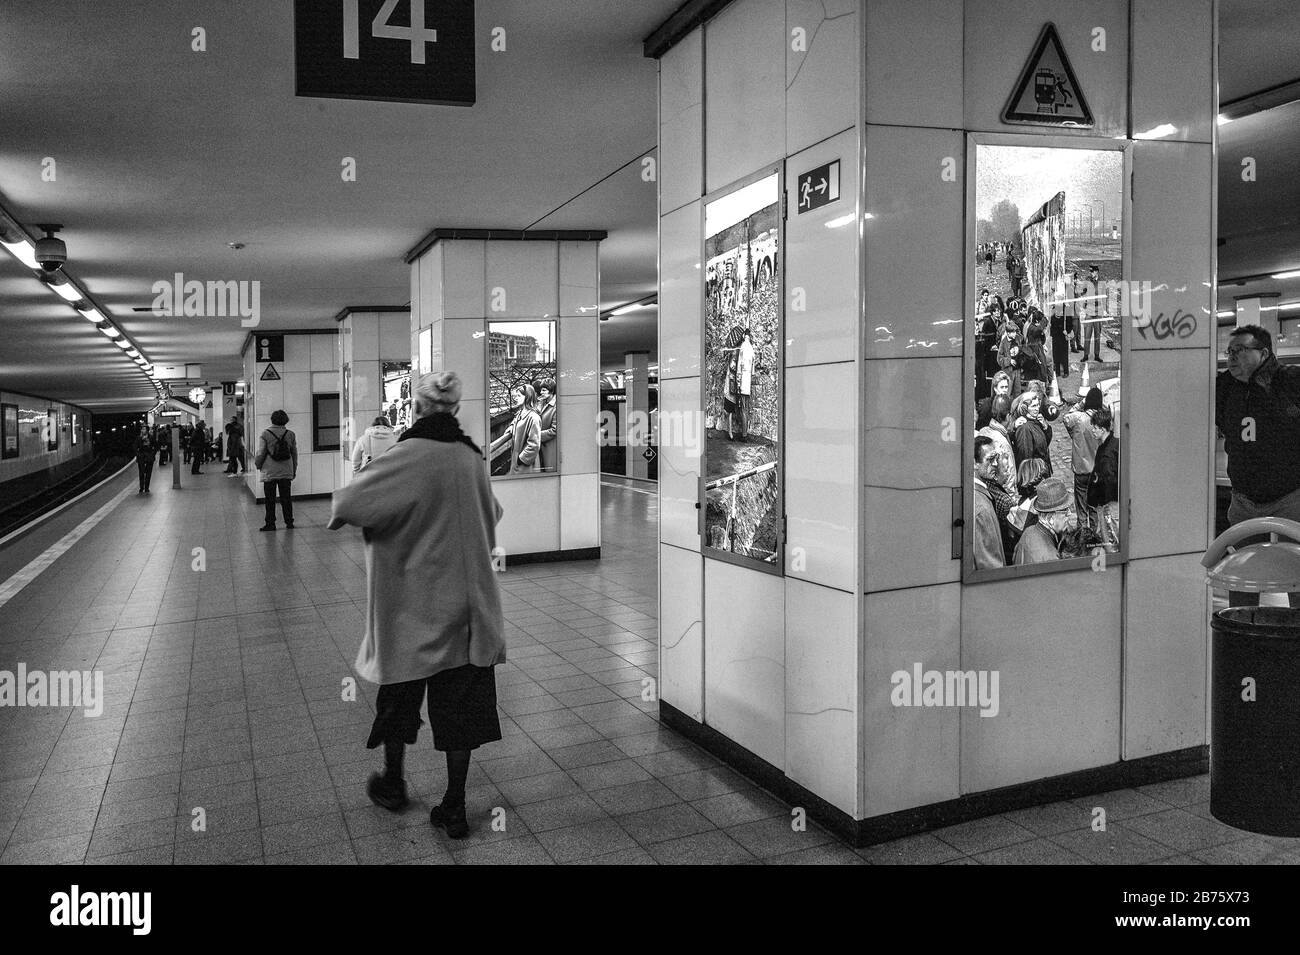 Germany, Berlin, 29.04.2017. Photography at the Potsdamer Platz S-Bahn station on 29.04.2017. [automated translation] Stock Photo